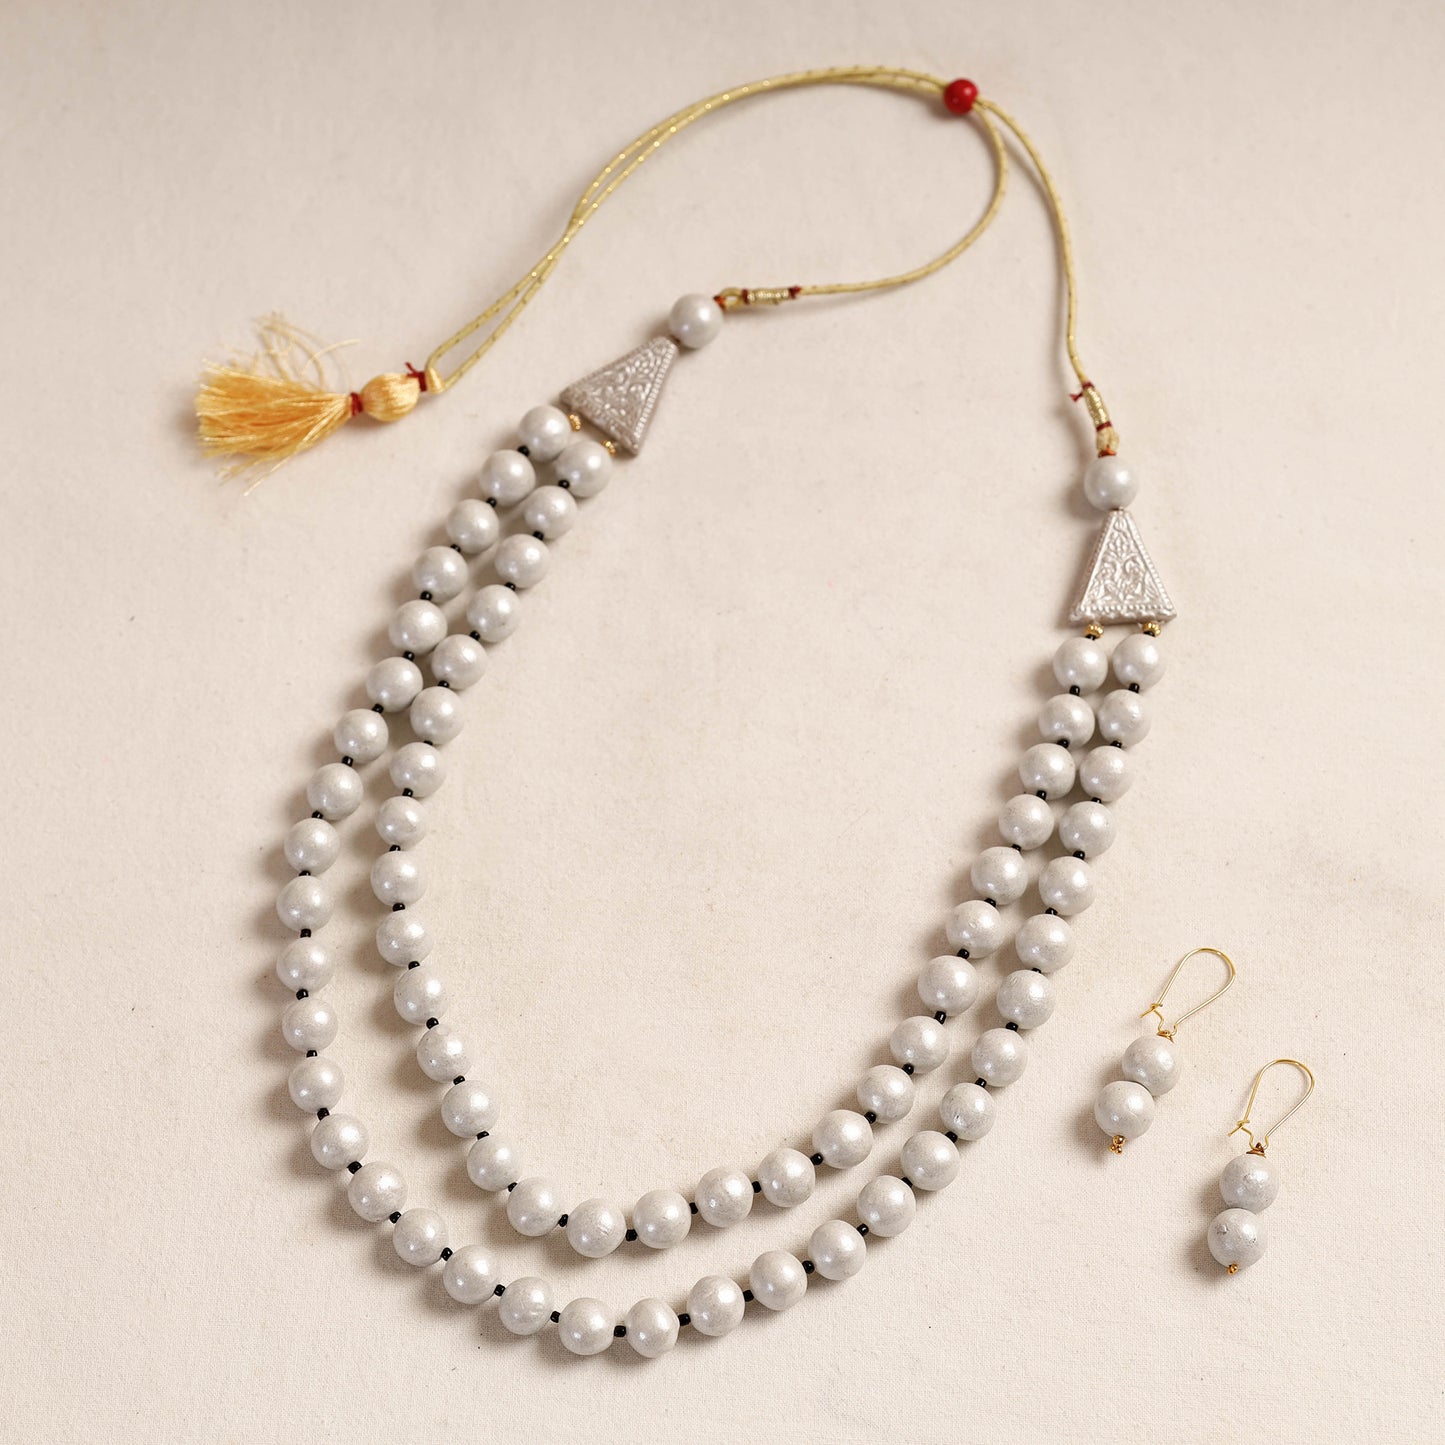 handpainted terracotta necklace set